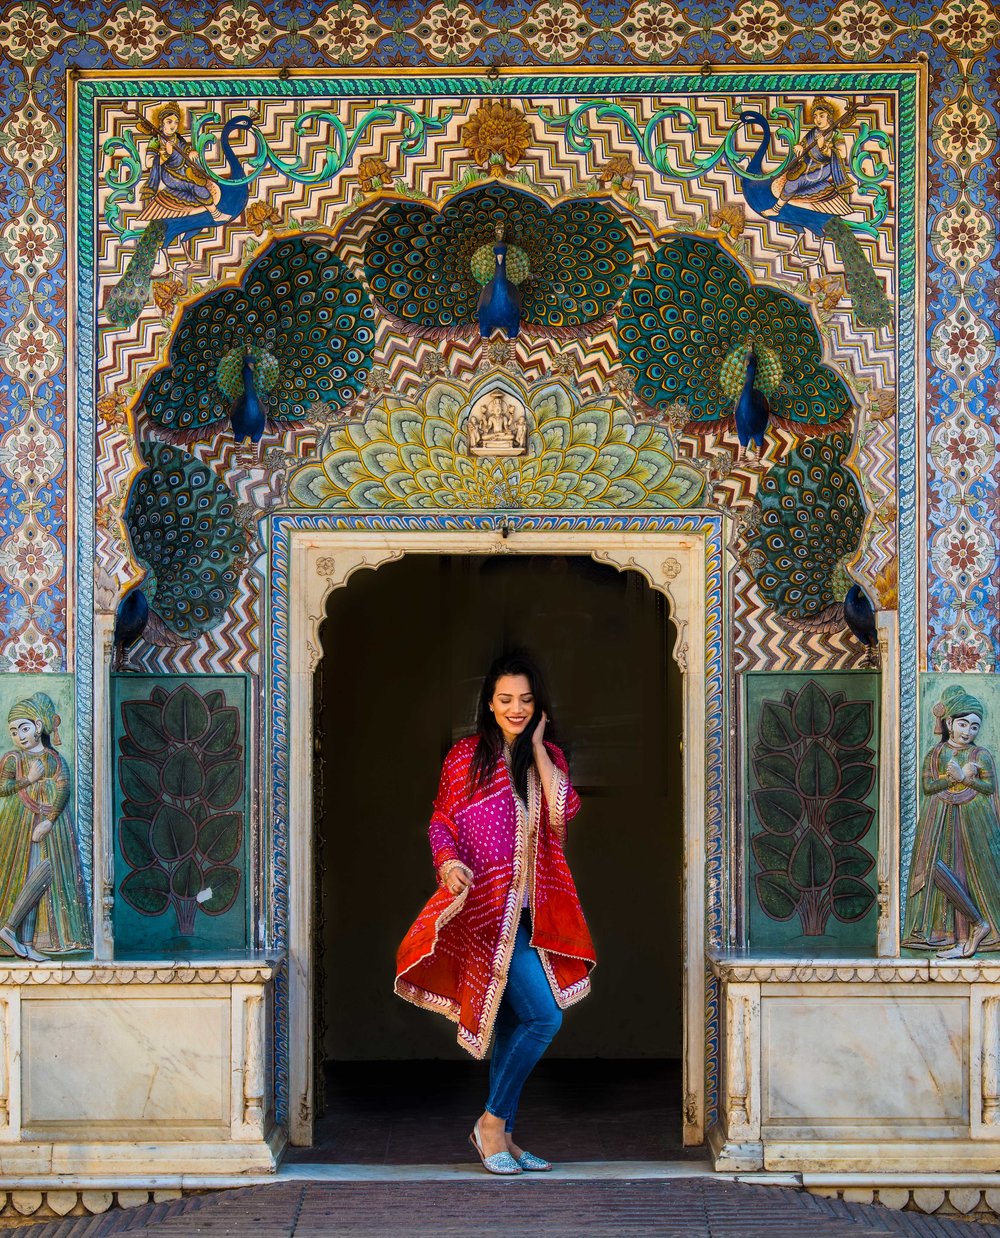 Discover India in Jaipur